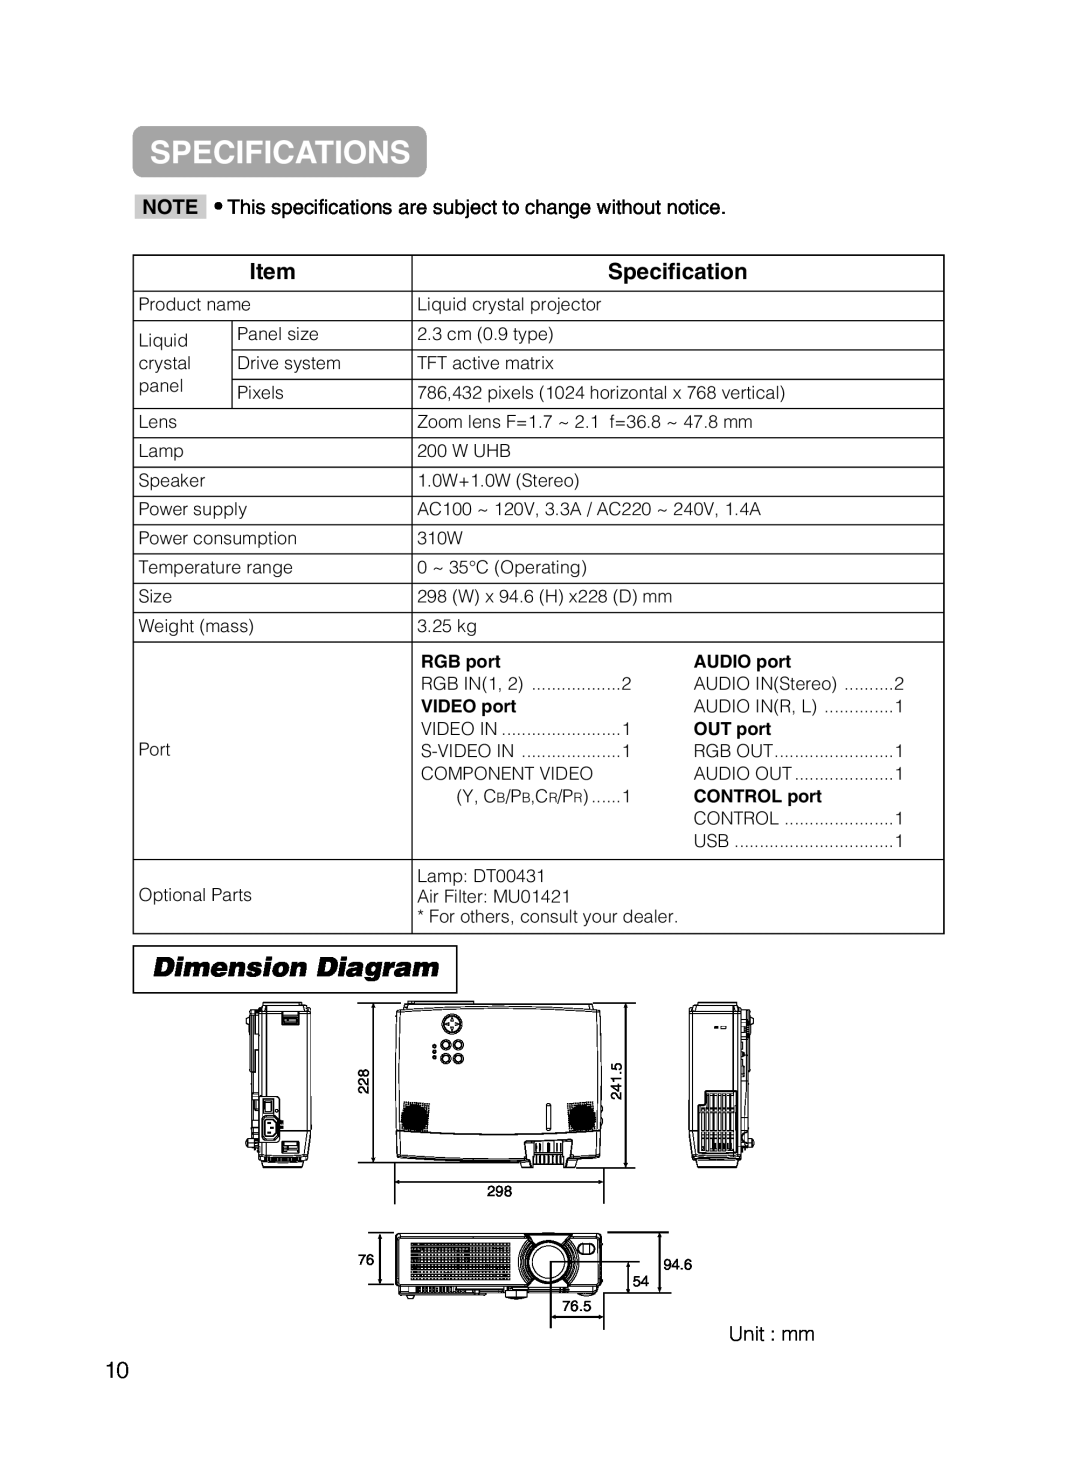 Hitachi CPX385W user manual Specifications, Dimension Diagram, Item 